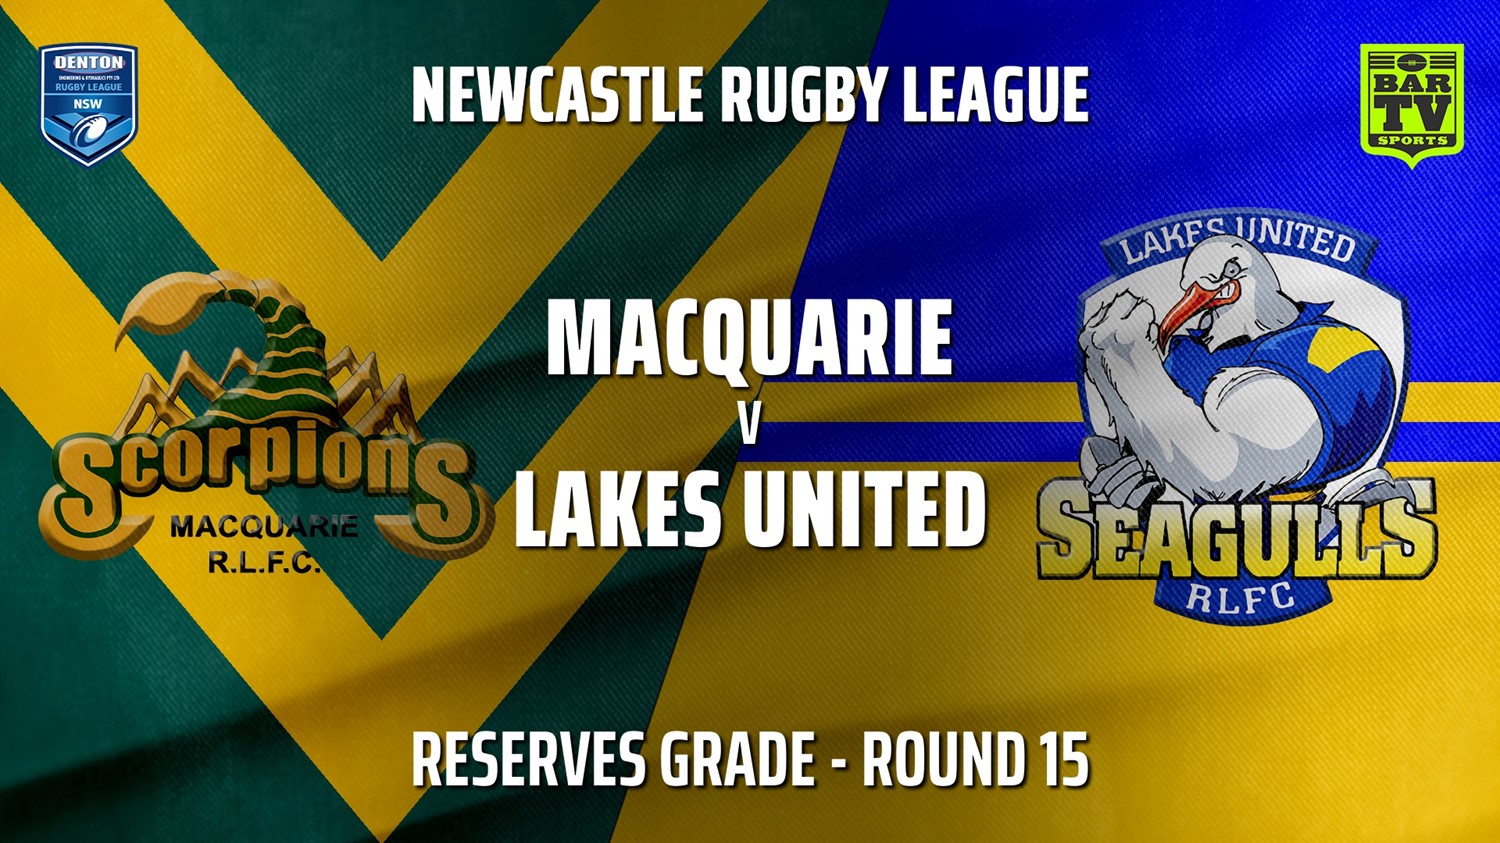 210717-Newcastle Round 15 - Reserves Grade - Macquarie Scorpions v Lakes United Slate Image